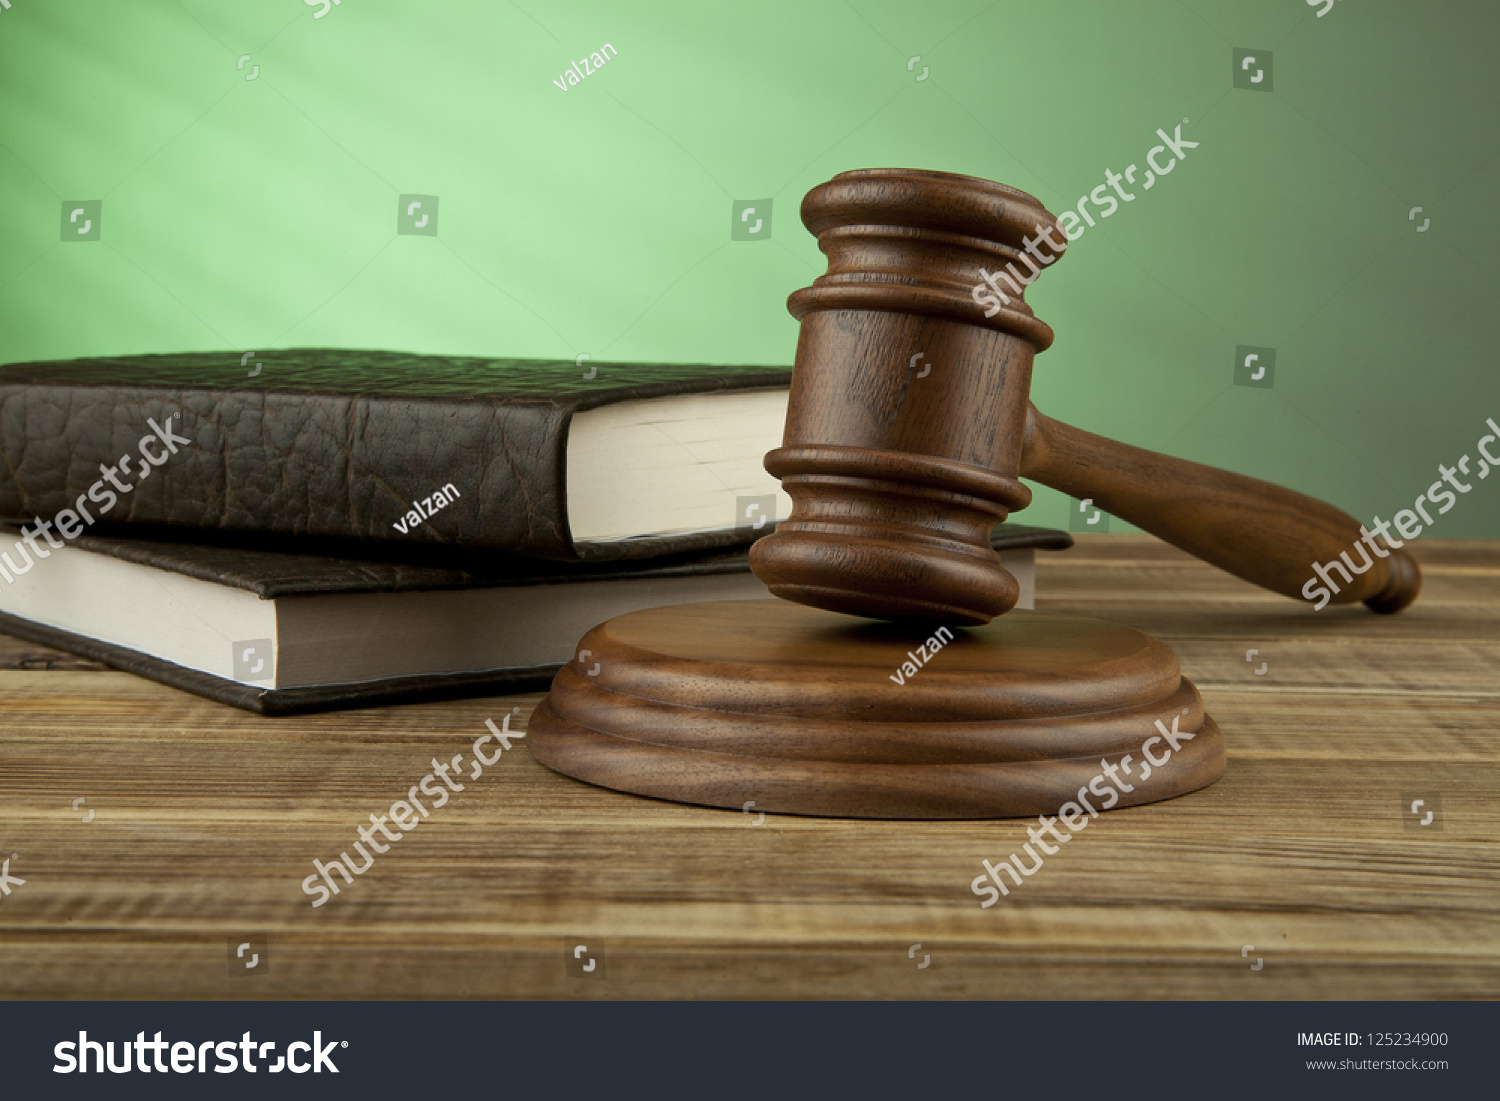 judge made law essay writer